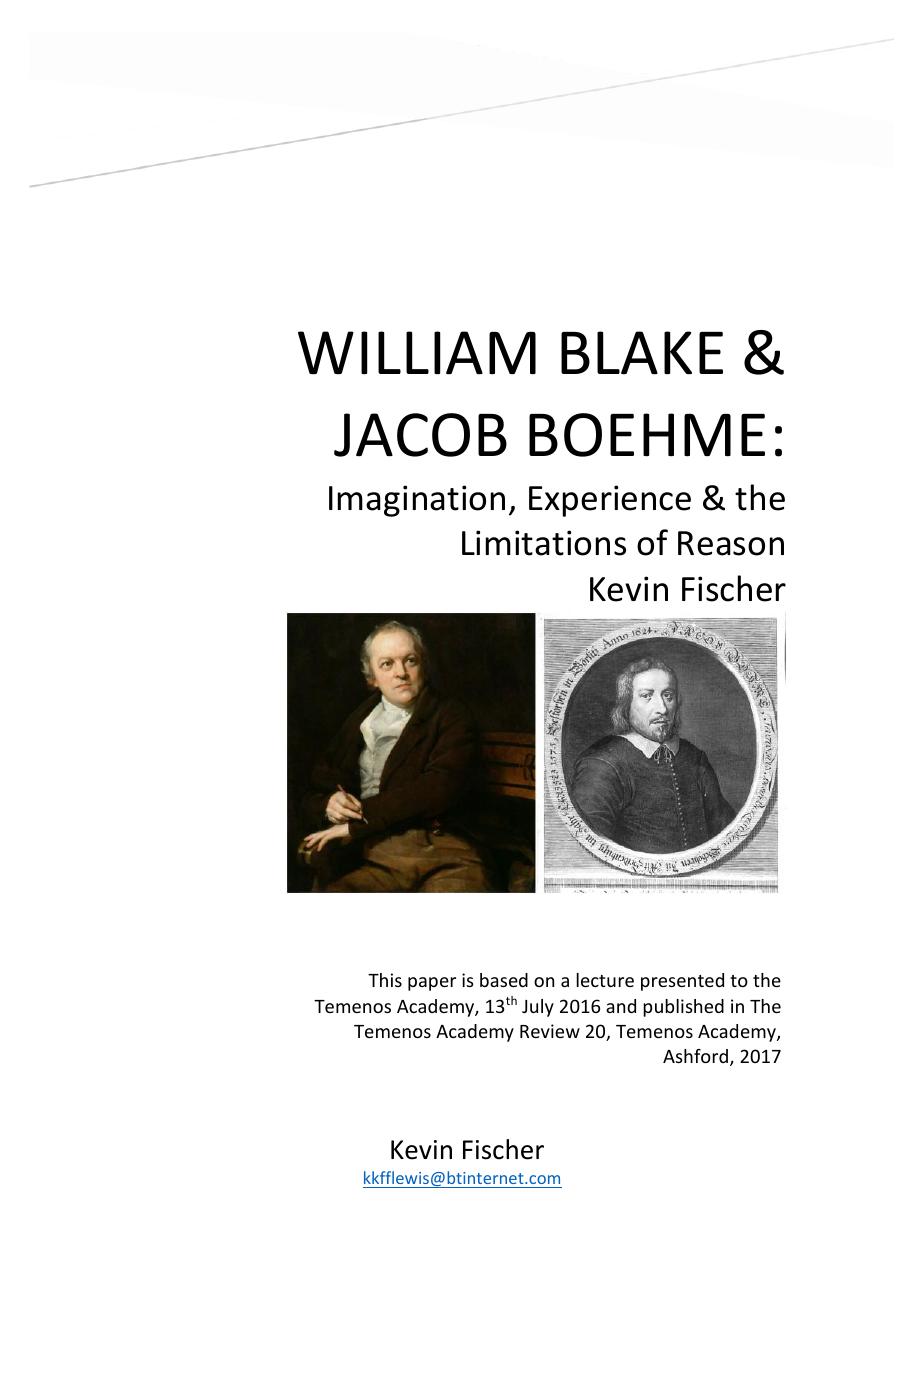 William Blake & Jacob Boehme - Imagination, Experience & the Limitations of Reason - Essay